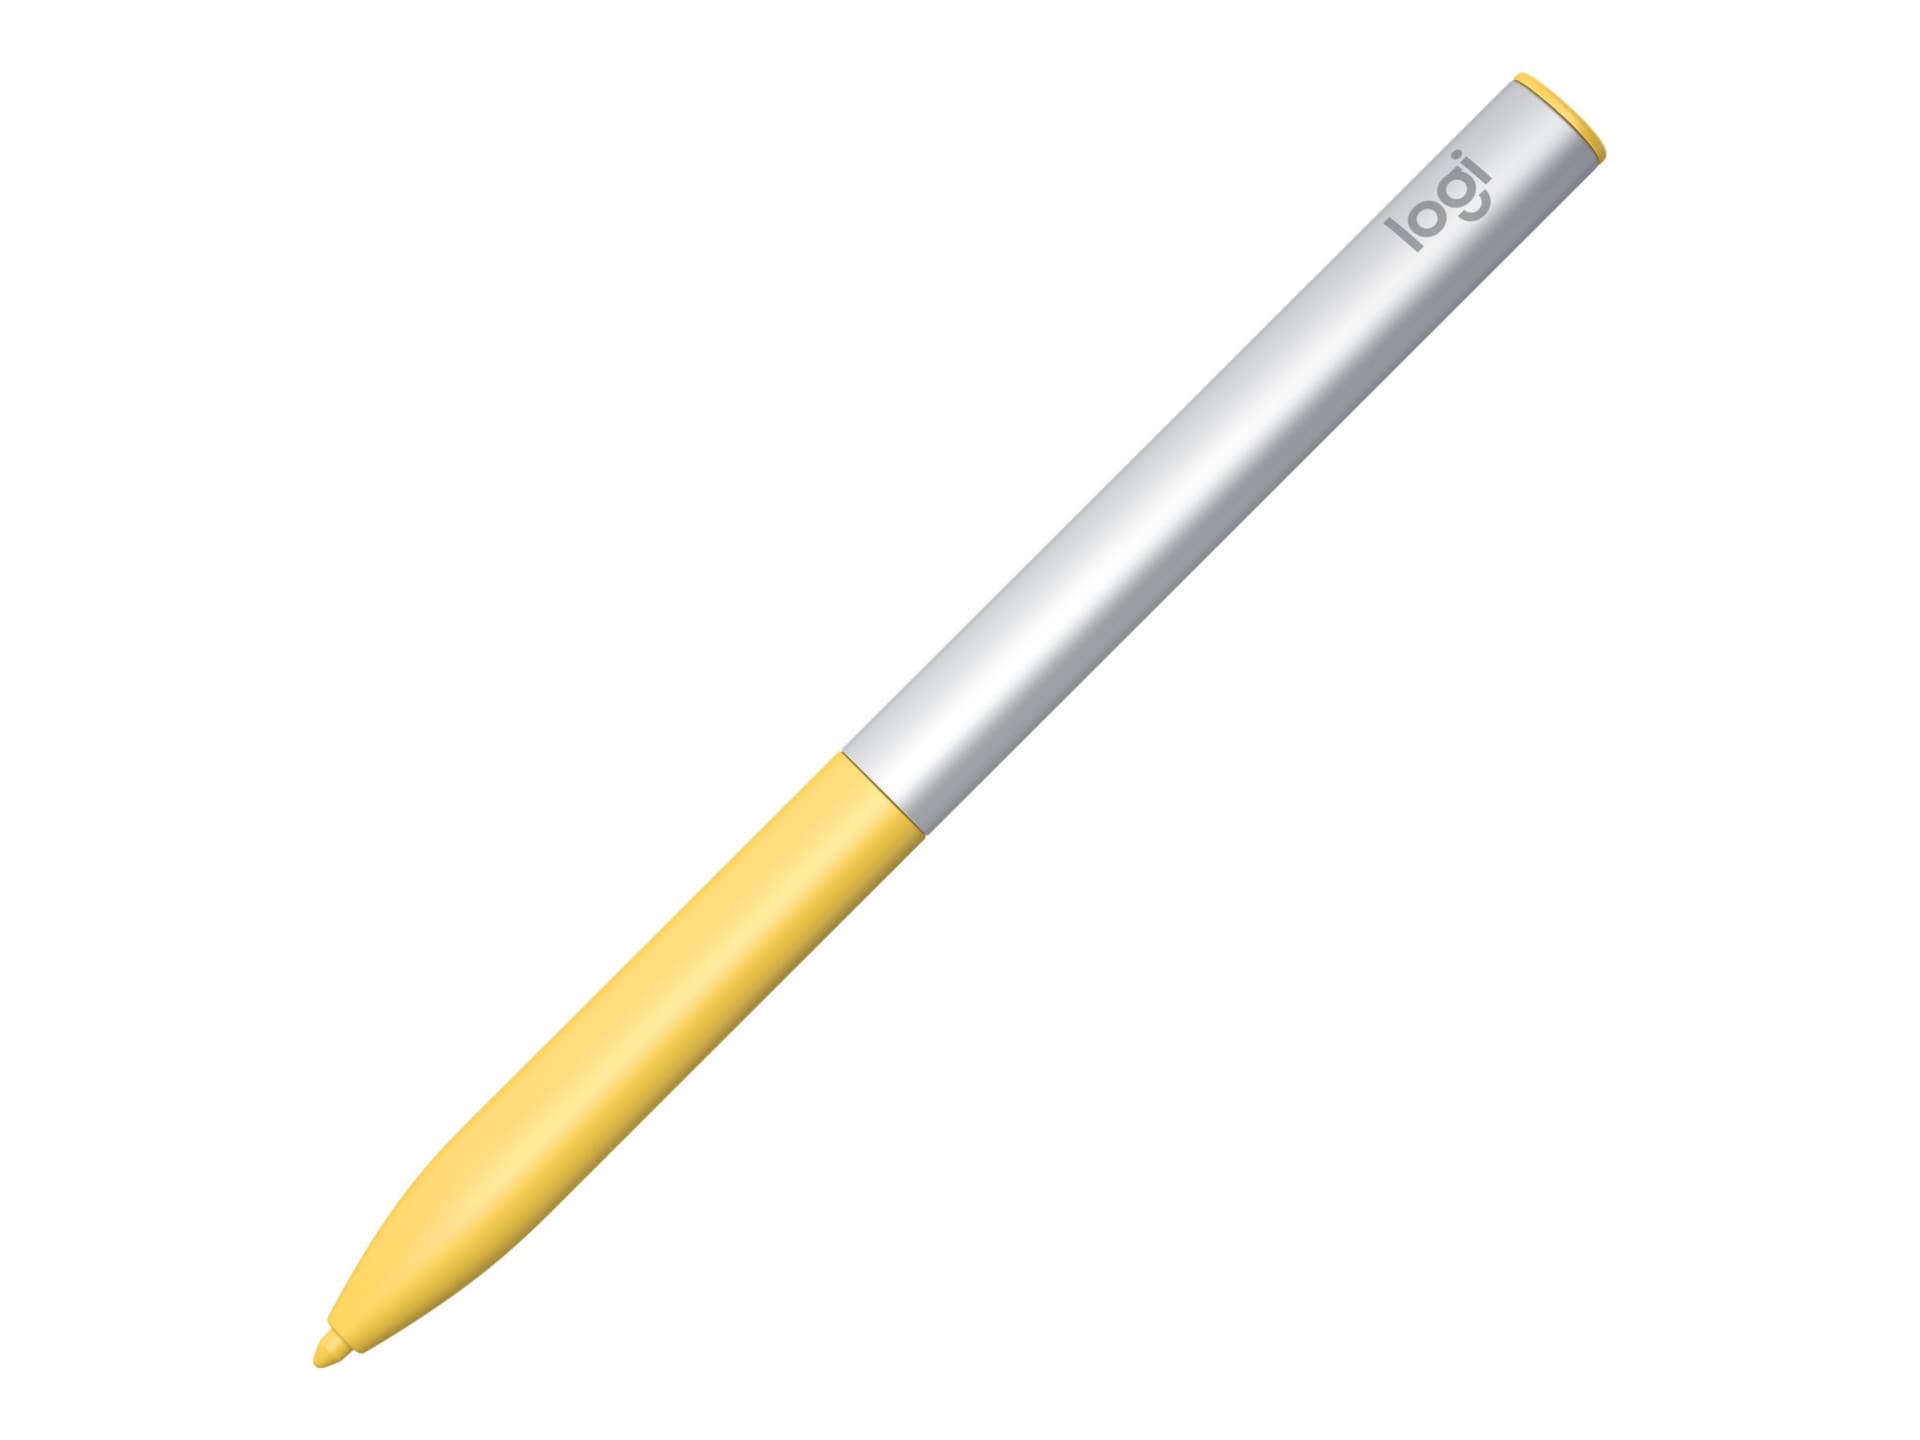 Logitech Pen Rechargeable USI Stylus Designed for Learning - digital pen - yellow